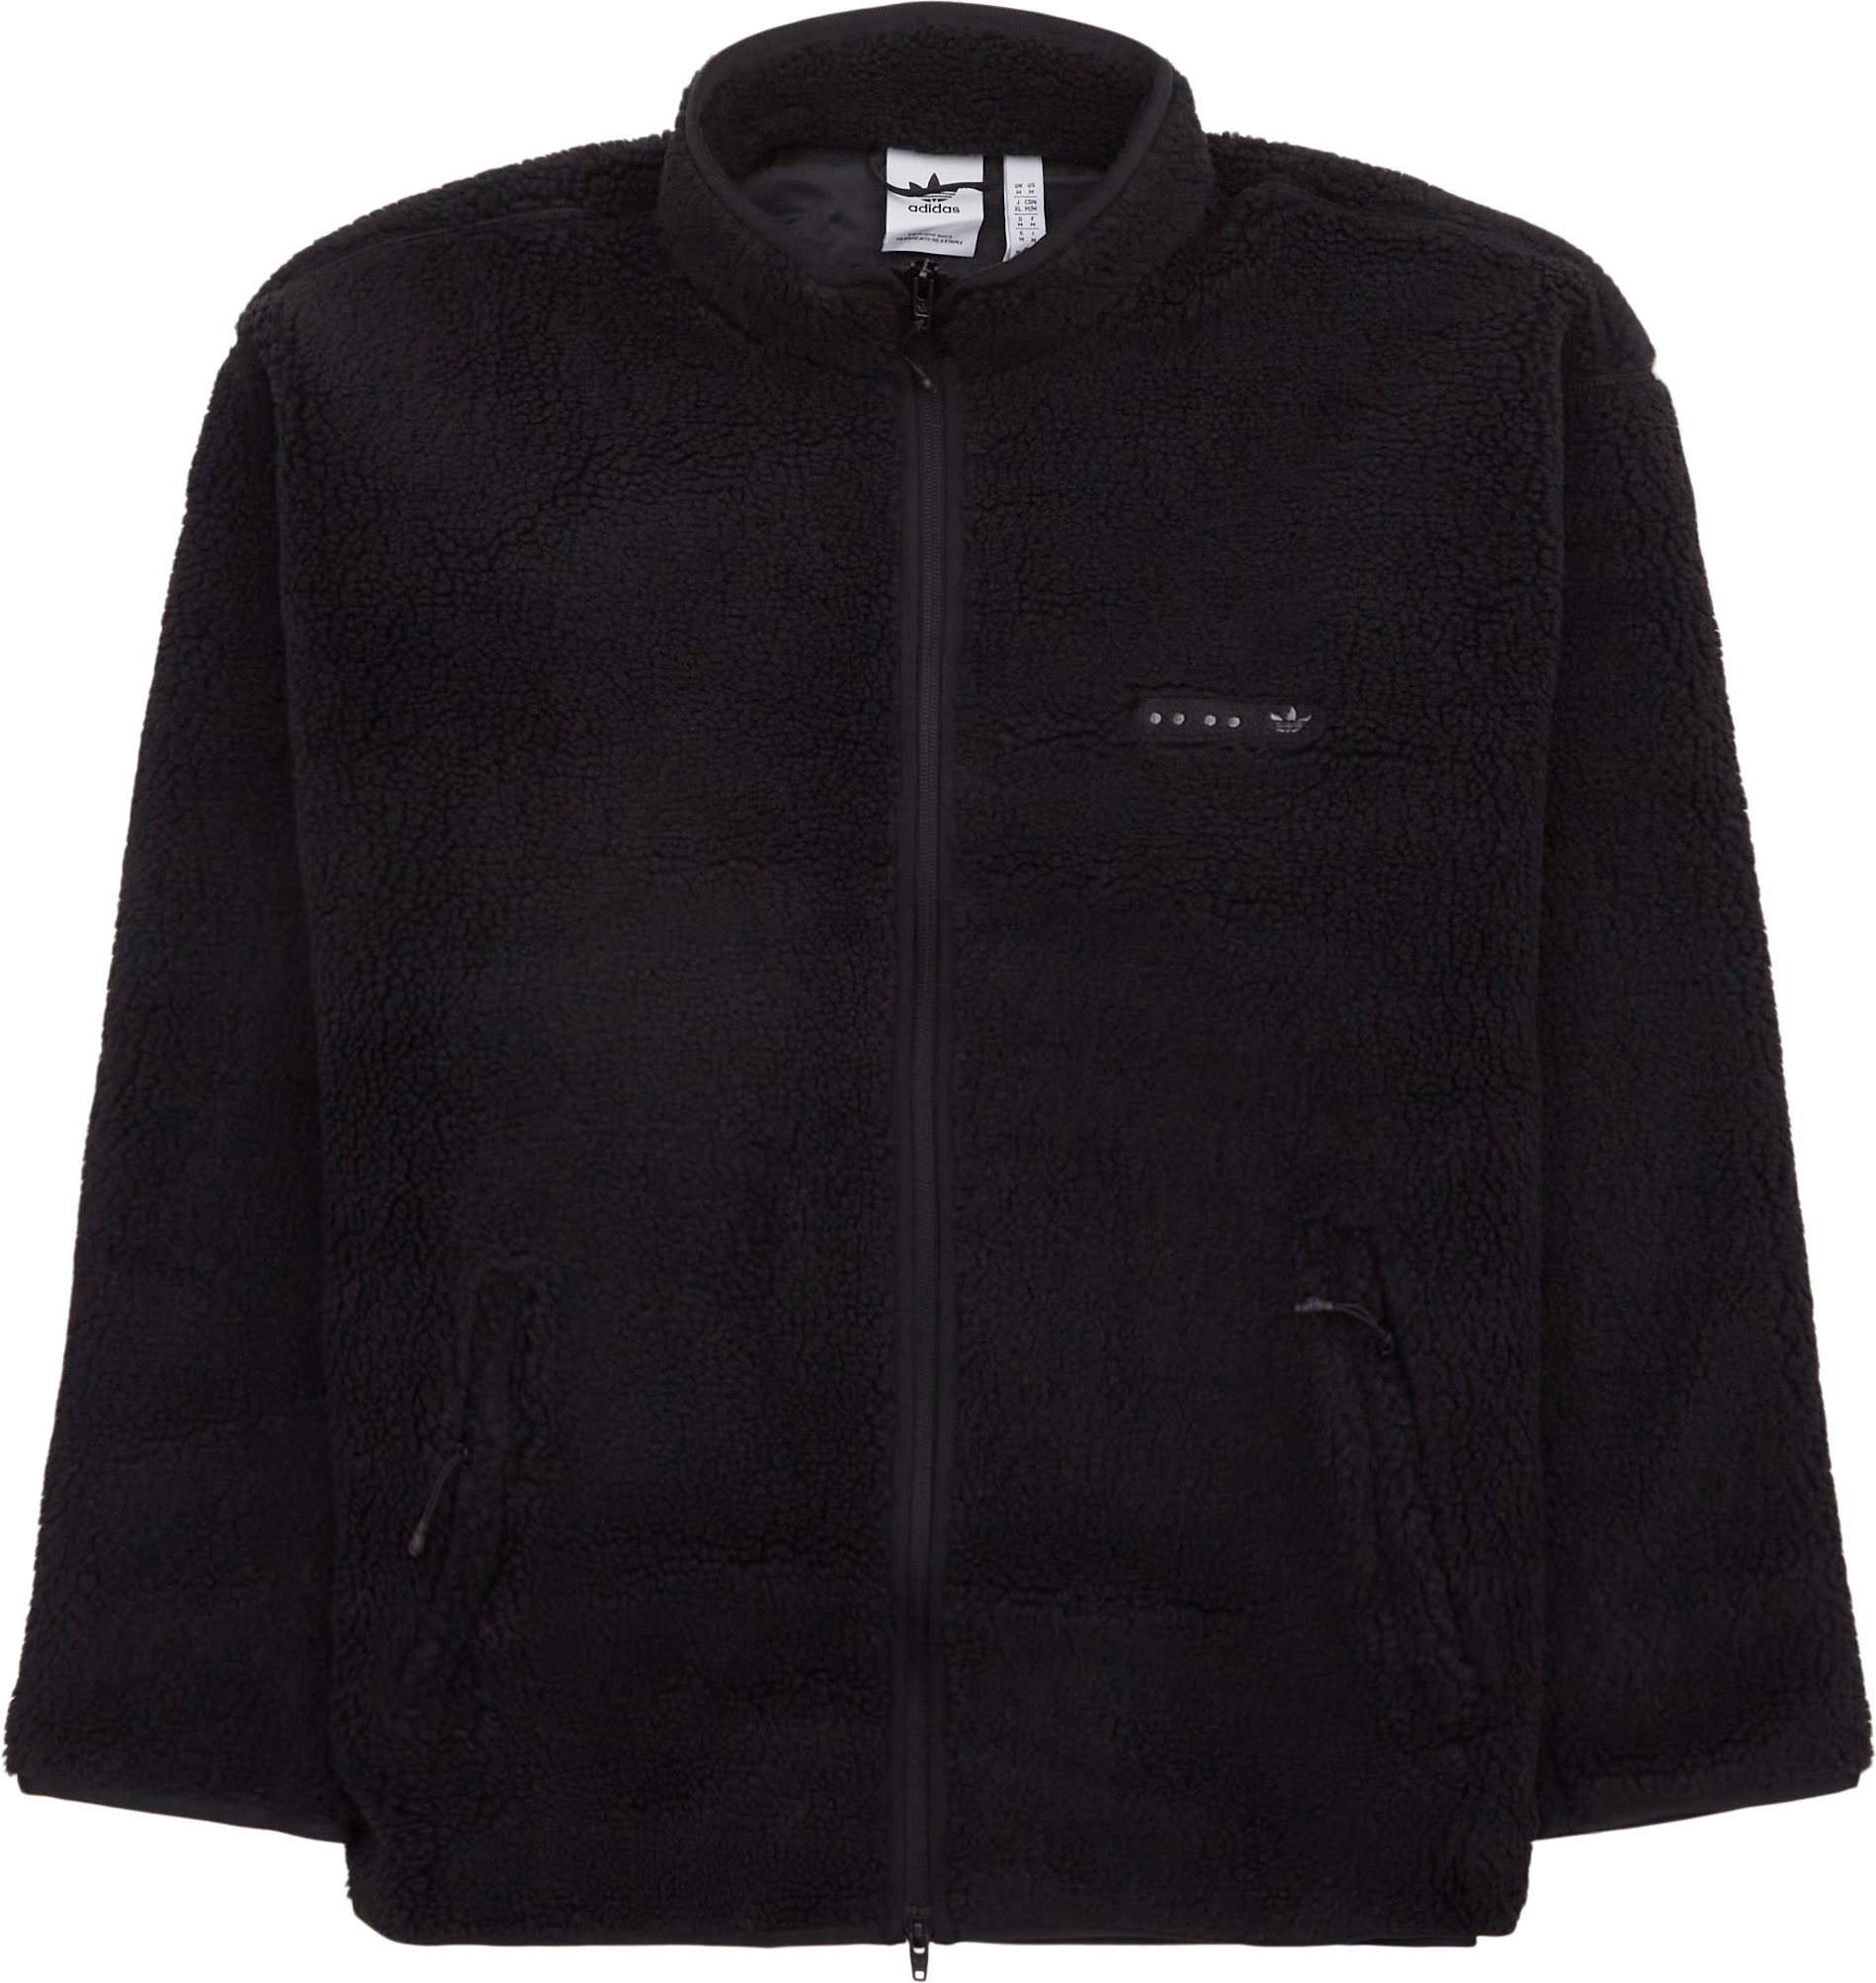 Adidas Originals Jackets SHERPA JKT HK2771 Black